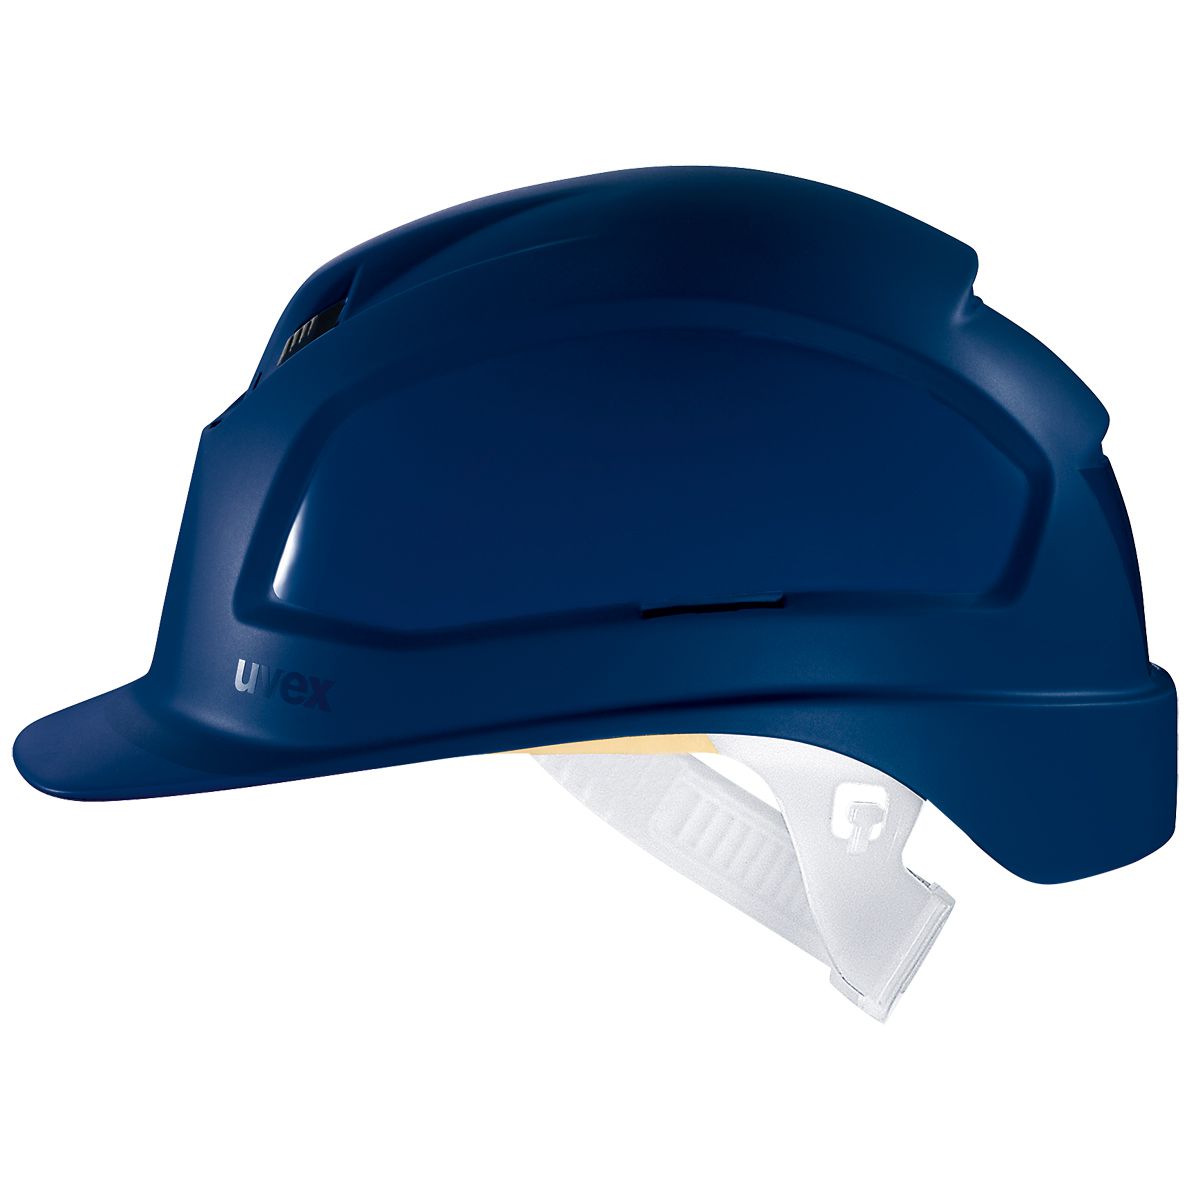 uvex pheos B Bauhelm - Robuster Schutzhelm für Bau & Industrie - EN 397 - Blau